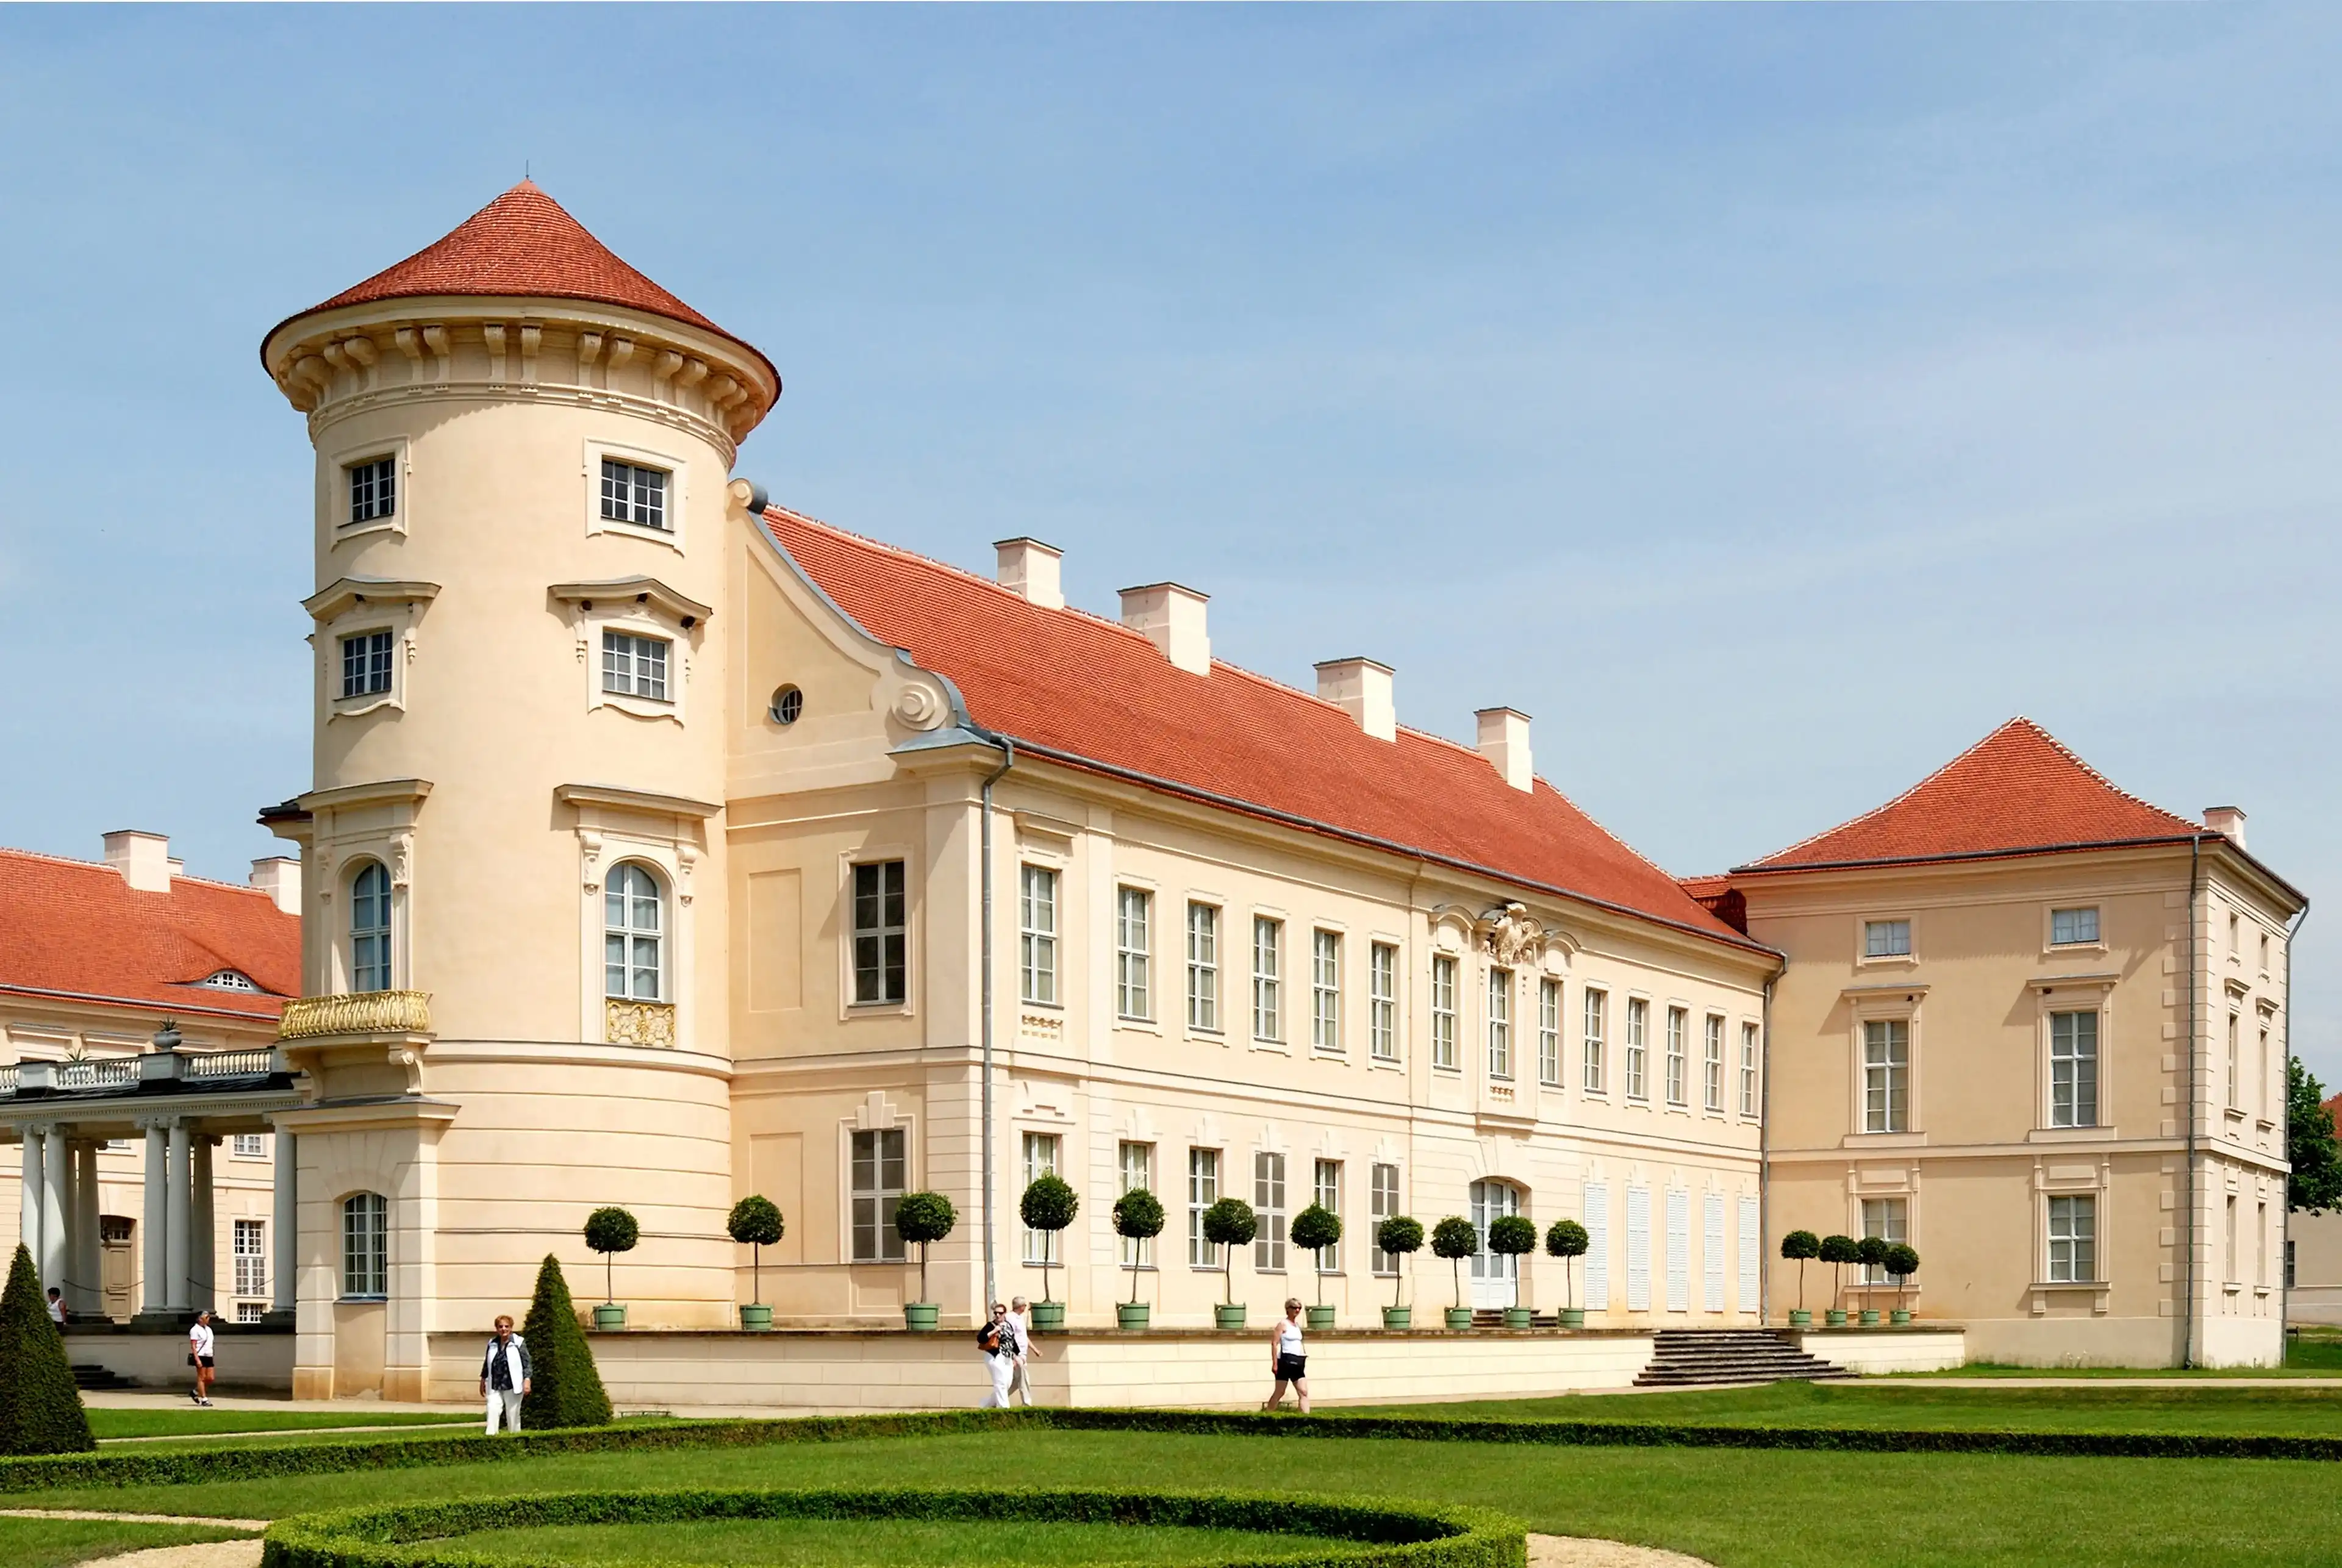 Brandenburg hotels. Best hotels in Brandenburg, Germany